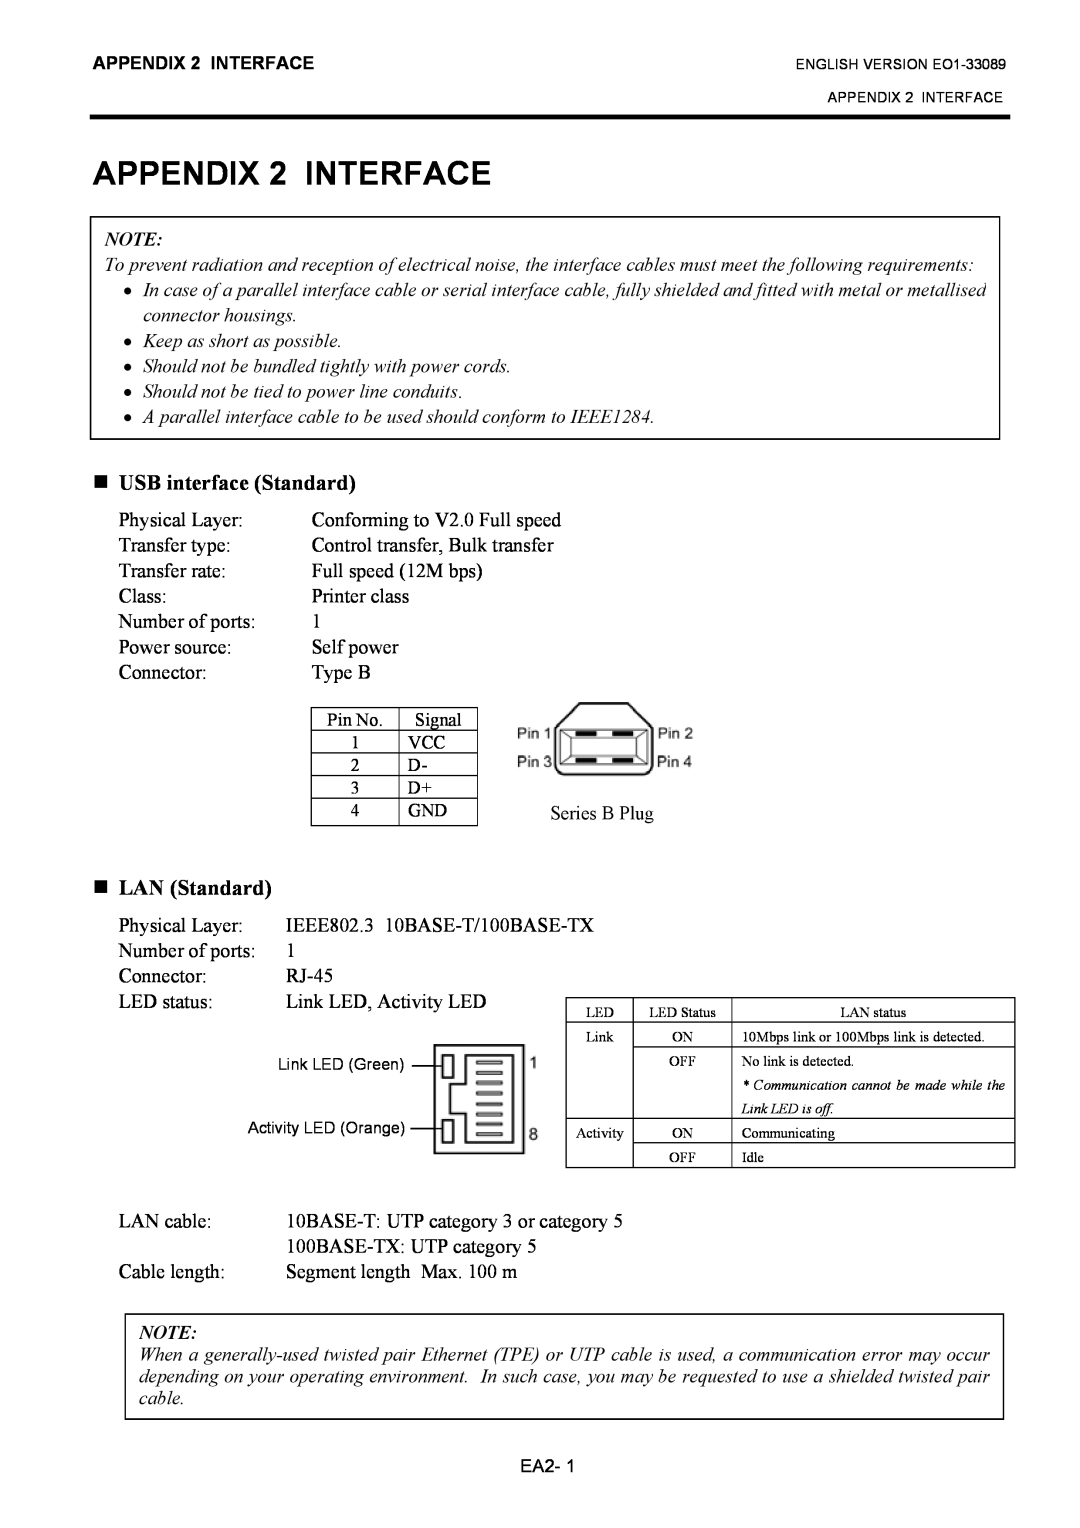 Toshiba B-EX4T1 manual APPENDIX 2 INTERFACE, USB interface Standard, LAN Standard 